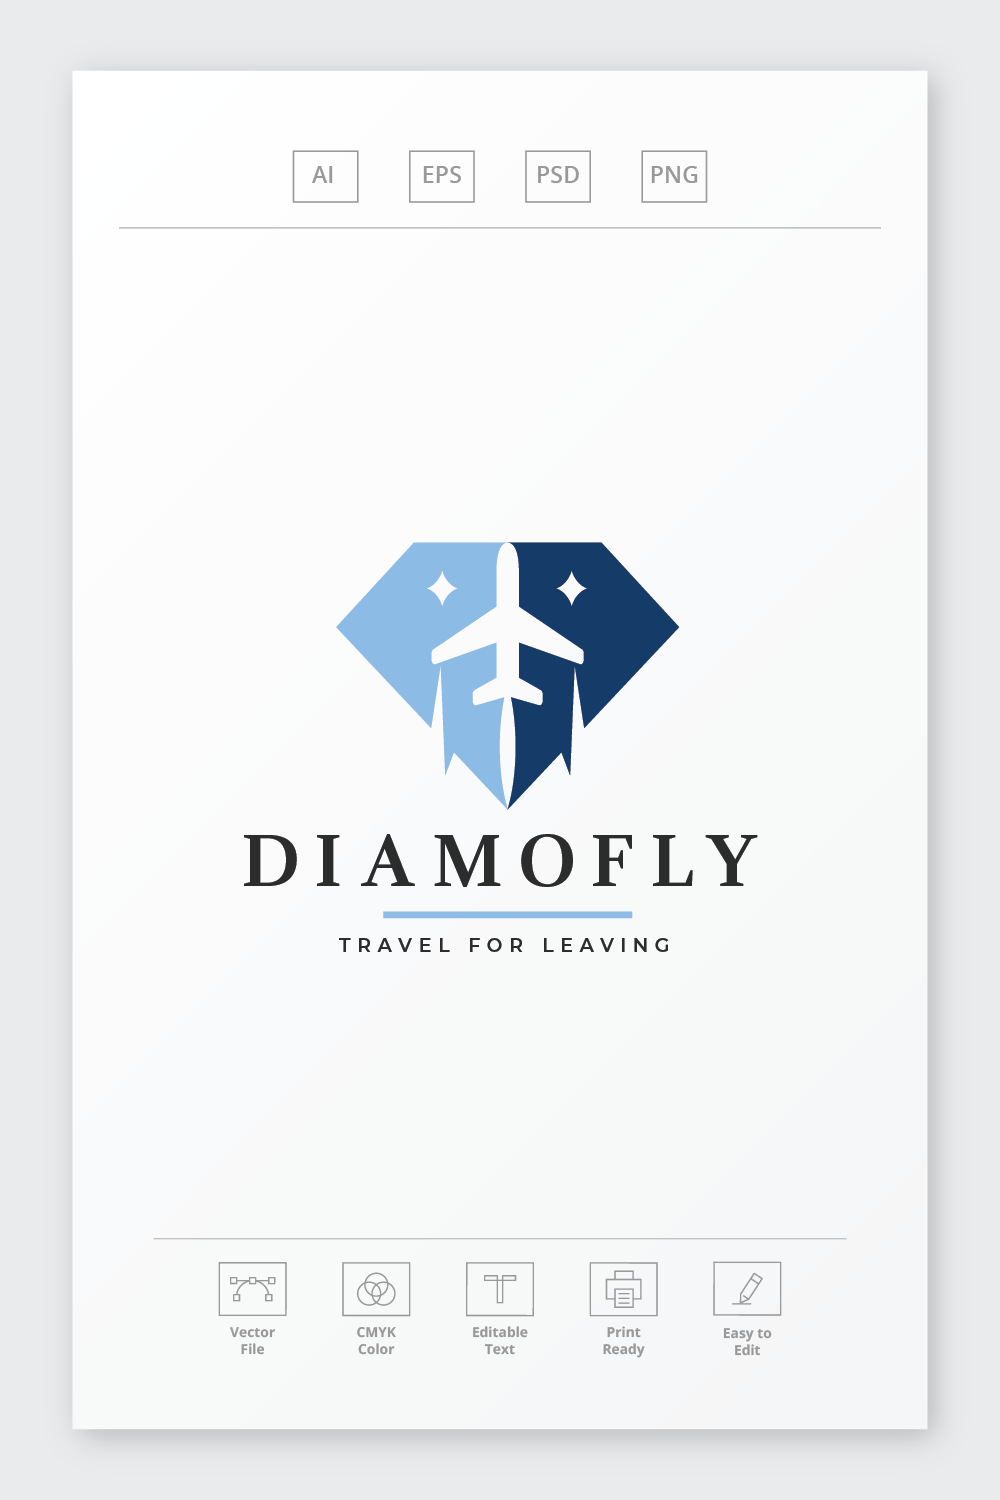 Diamond Fly Travel Logo pinterest preview image.